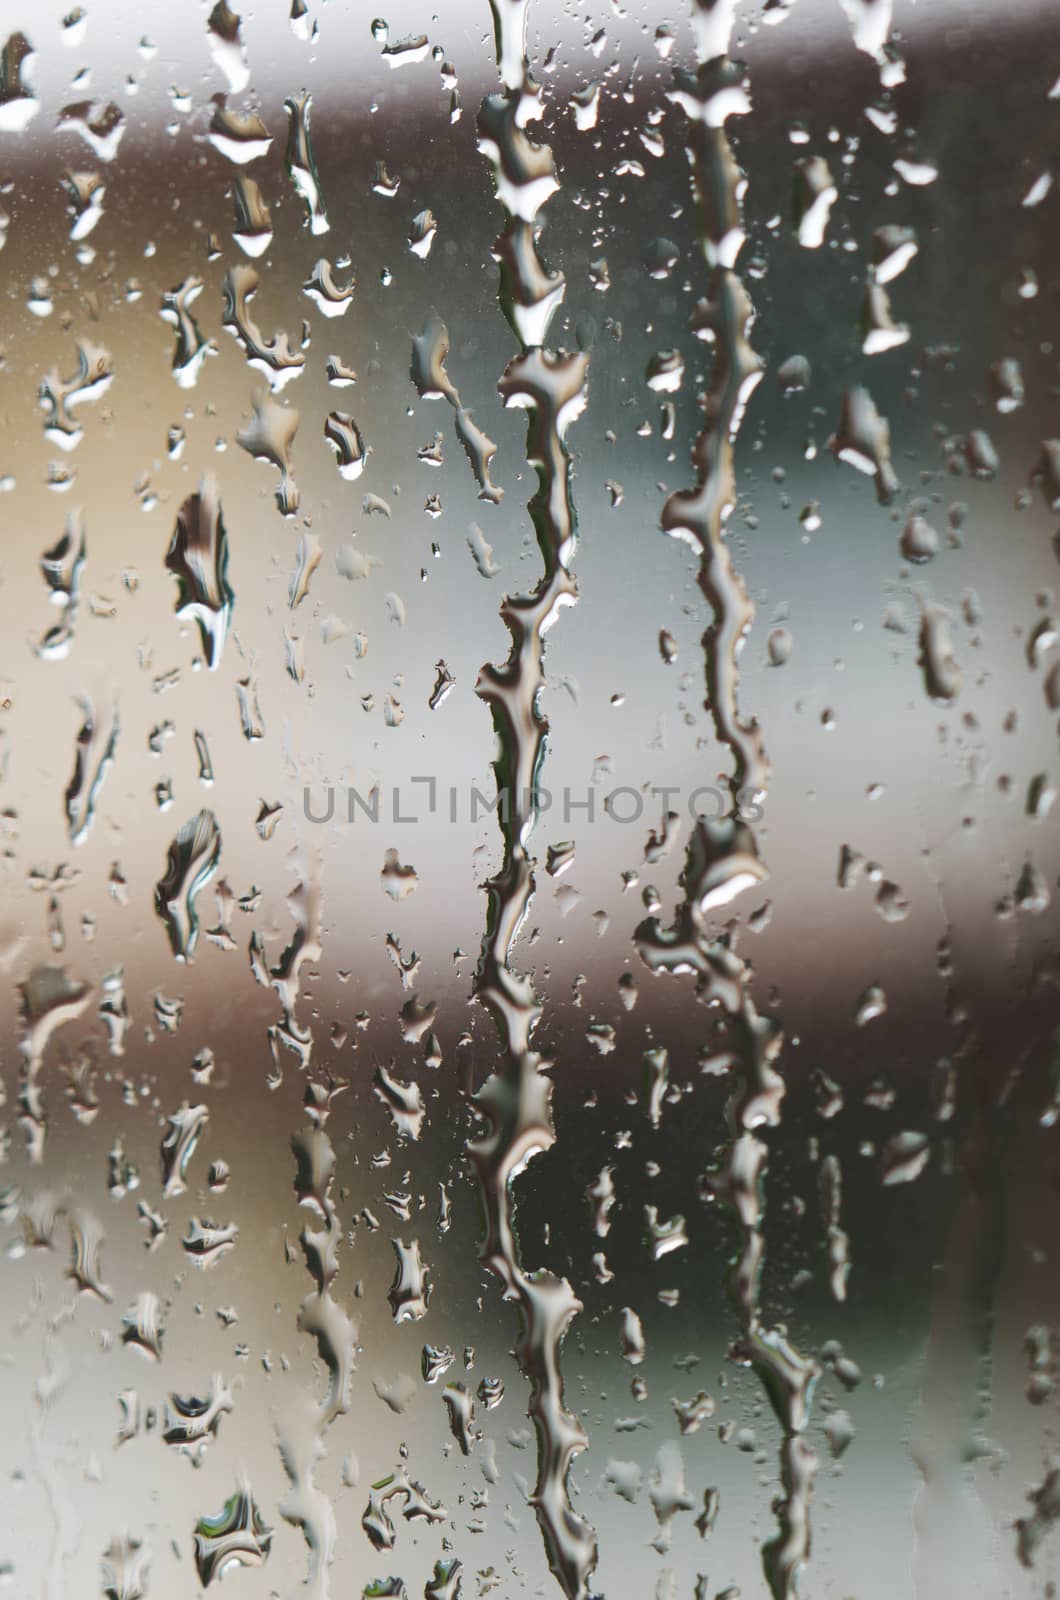 Rain water drops on windows - selective focus by daoleduc